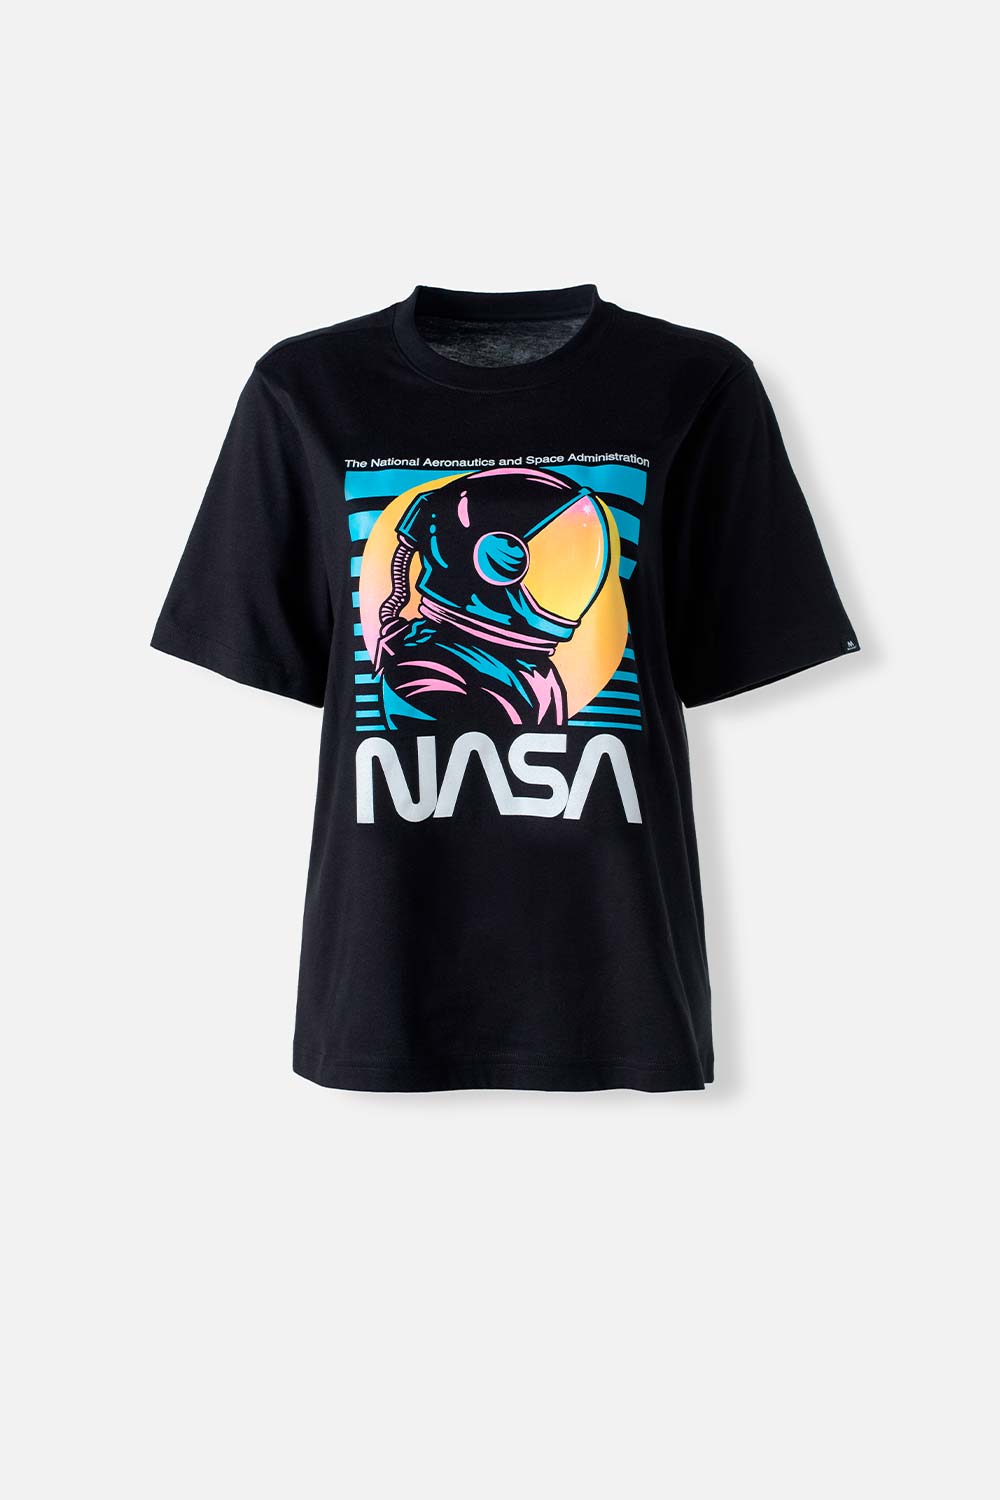  NASA Camiseta Hombre Camisa Cuello Redondo Manga Corta Camisa,  Negro - : Ropa, Zapatos y Joyería